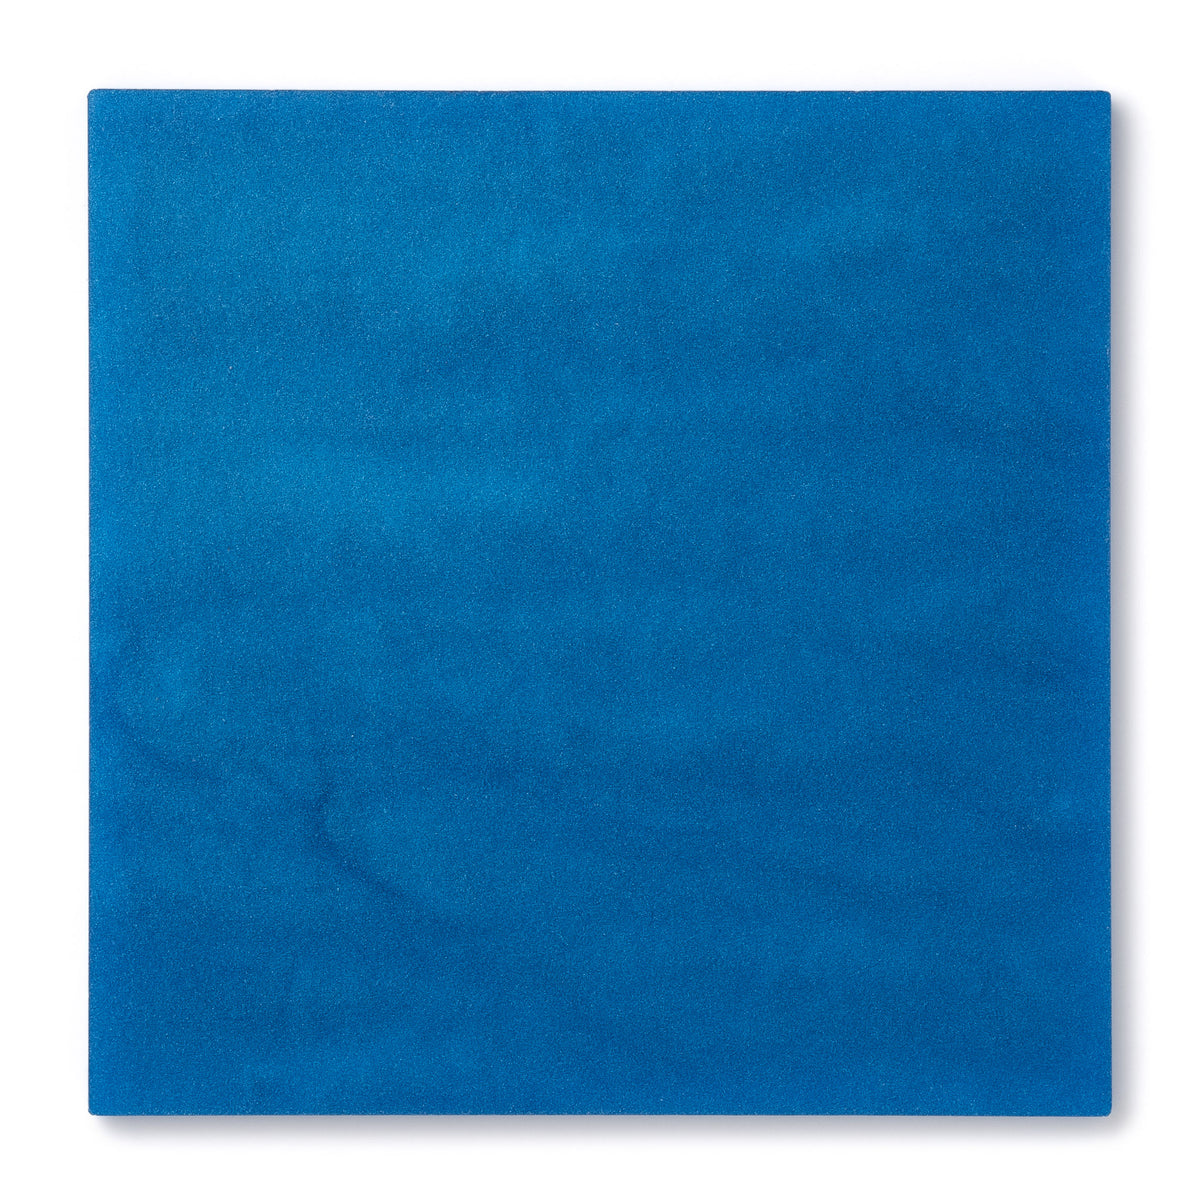 Blue Pearl Acrylic Plexiglass Sheet, Swatch View